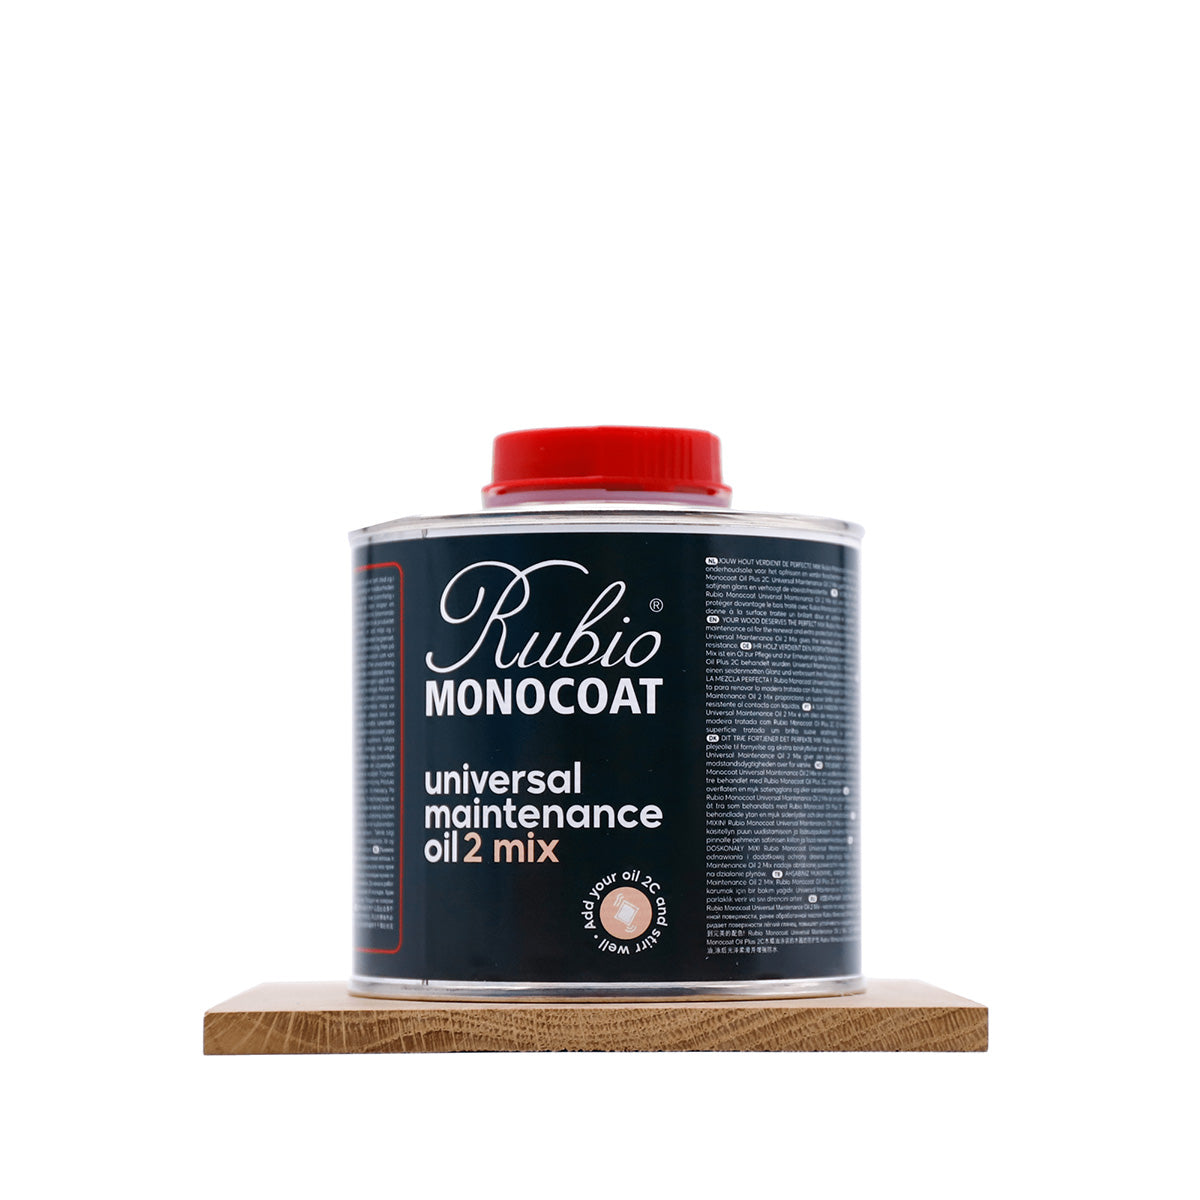 Rubio Monocoat Universal Maintenance Oil 2 Mix